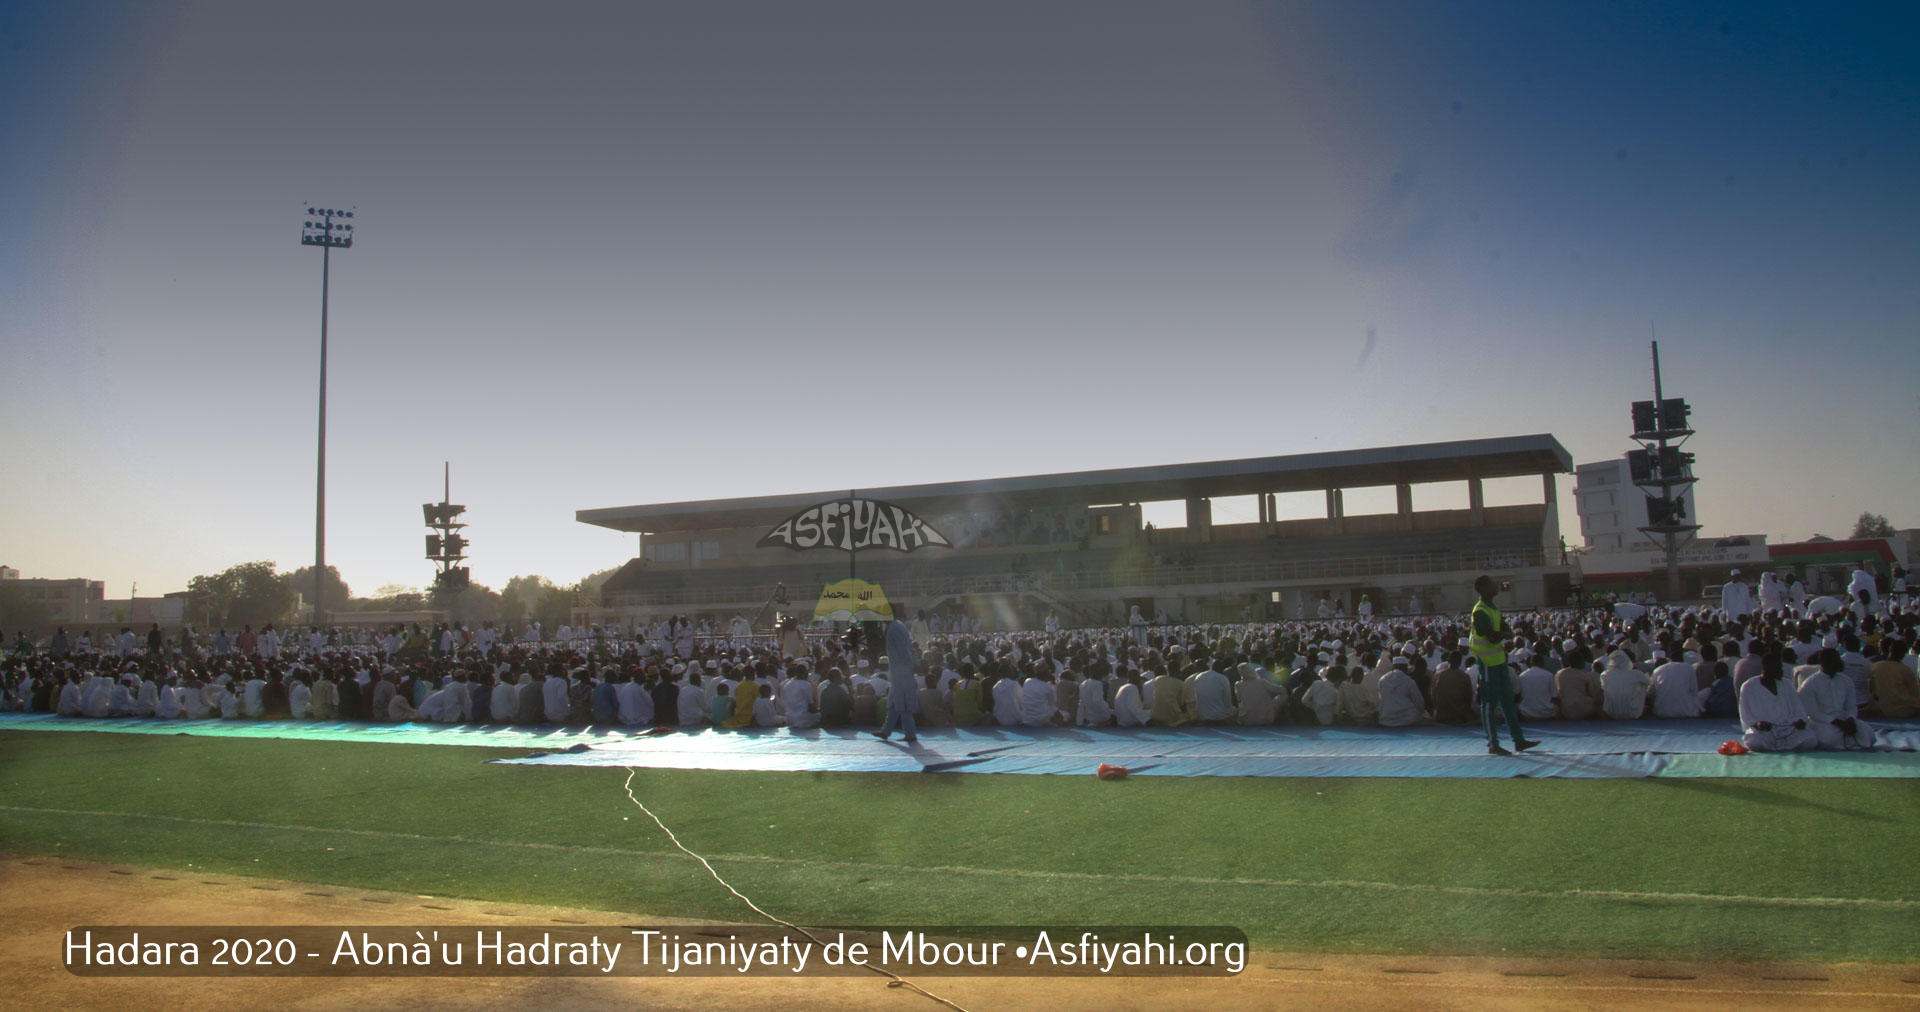 PHOTOS - Les Images de la Hadratoul Djumah  2020  d'Abnà'u Hadraty Tijaniyaty de Mbour